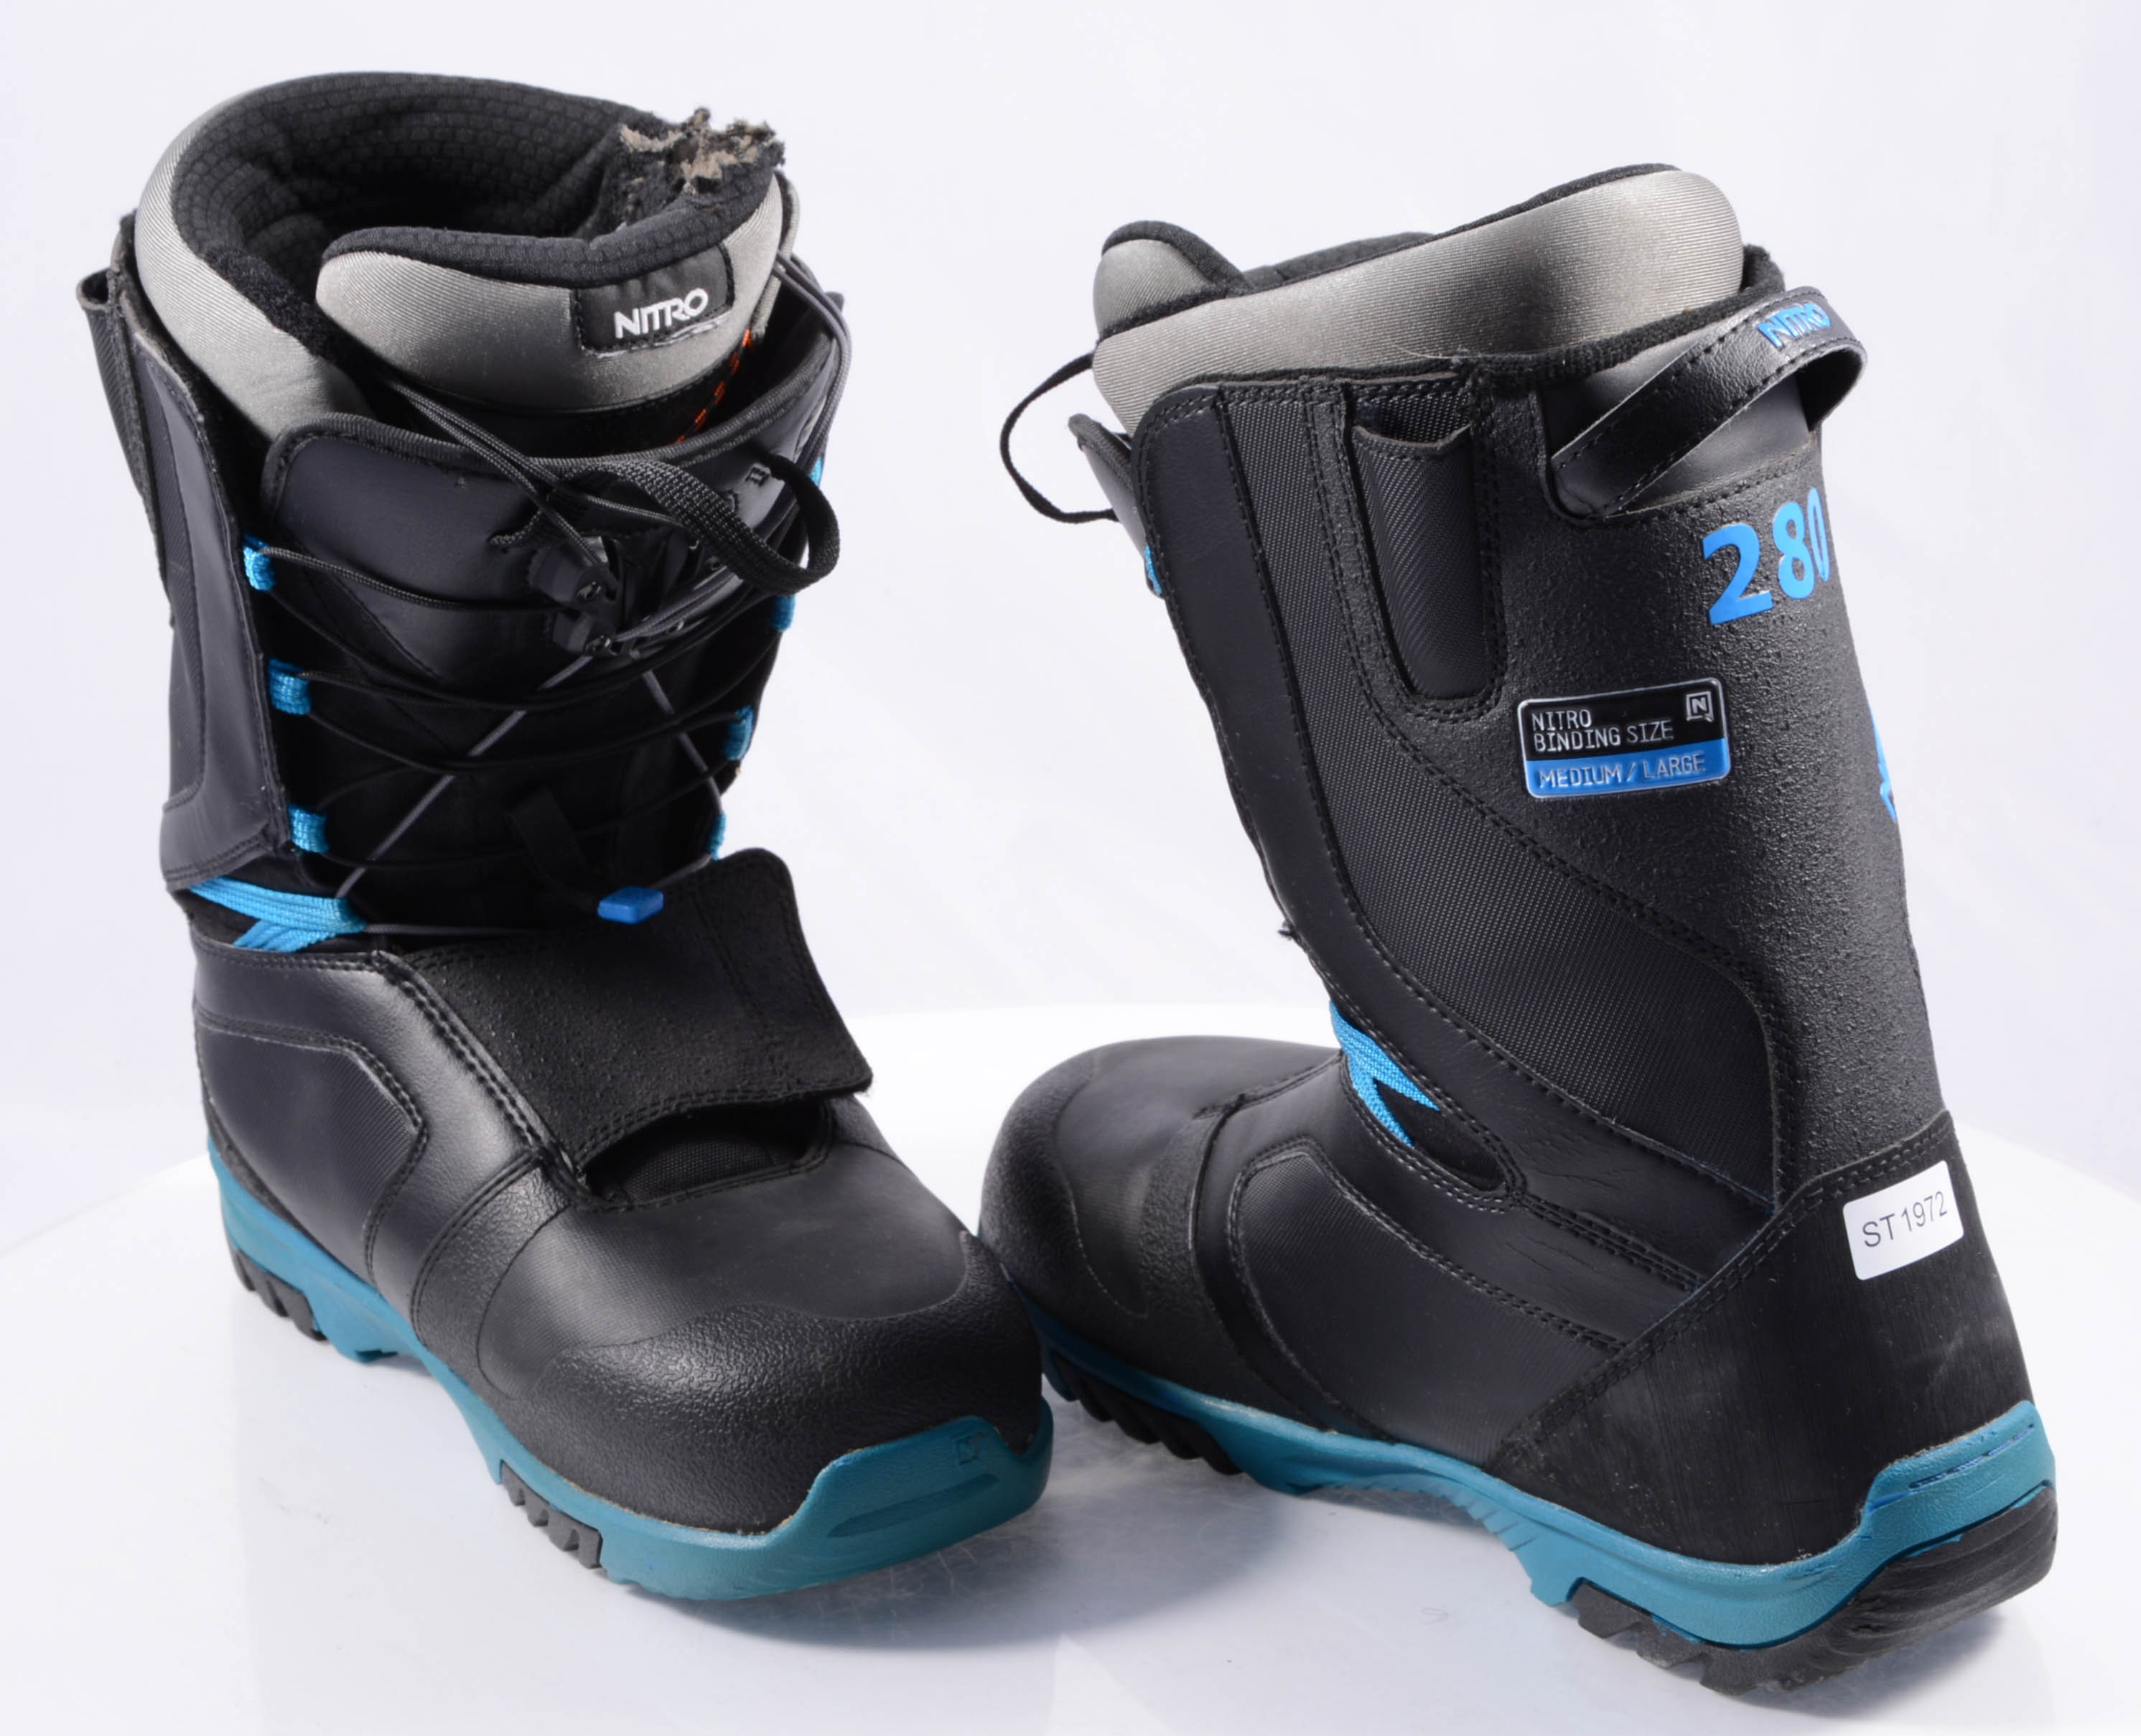 Interpretatief Arbeid Orkaan boots snowboard NITRO AGENT TLS 2020, BLACK/blue - Mardosport.ro